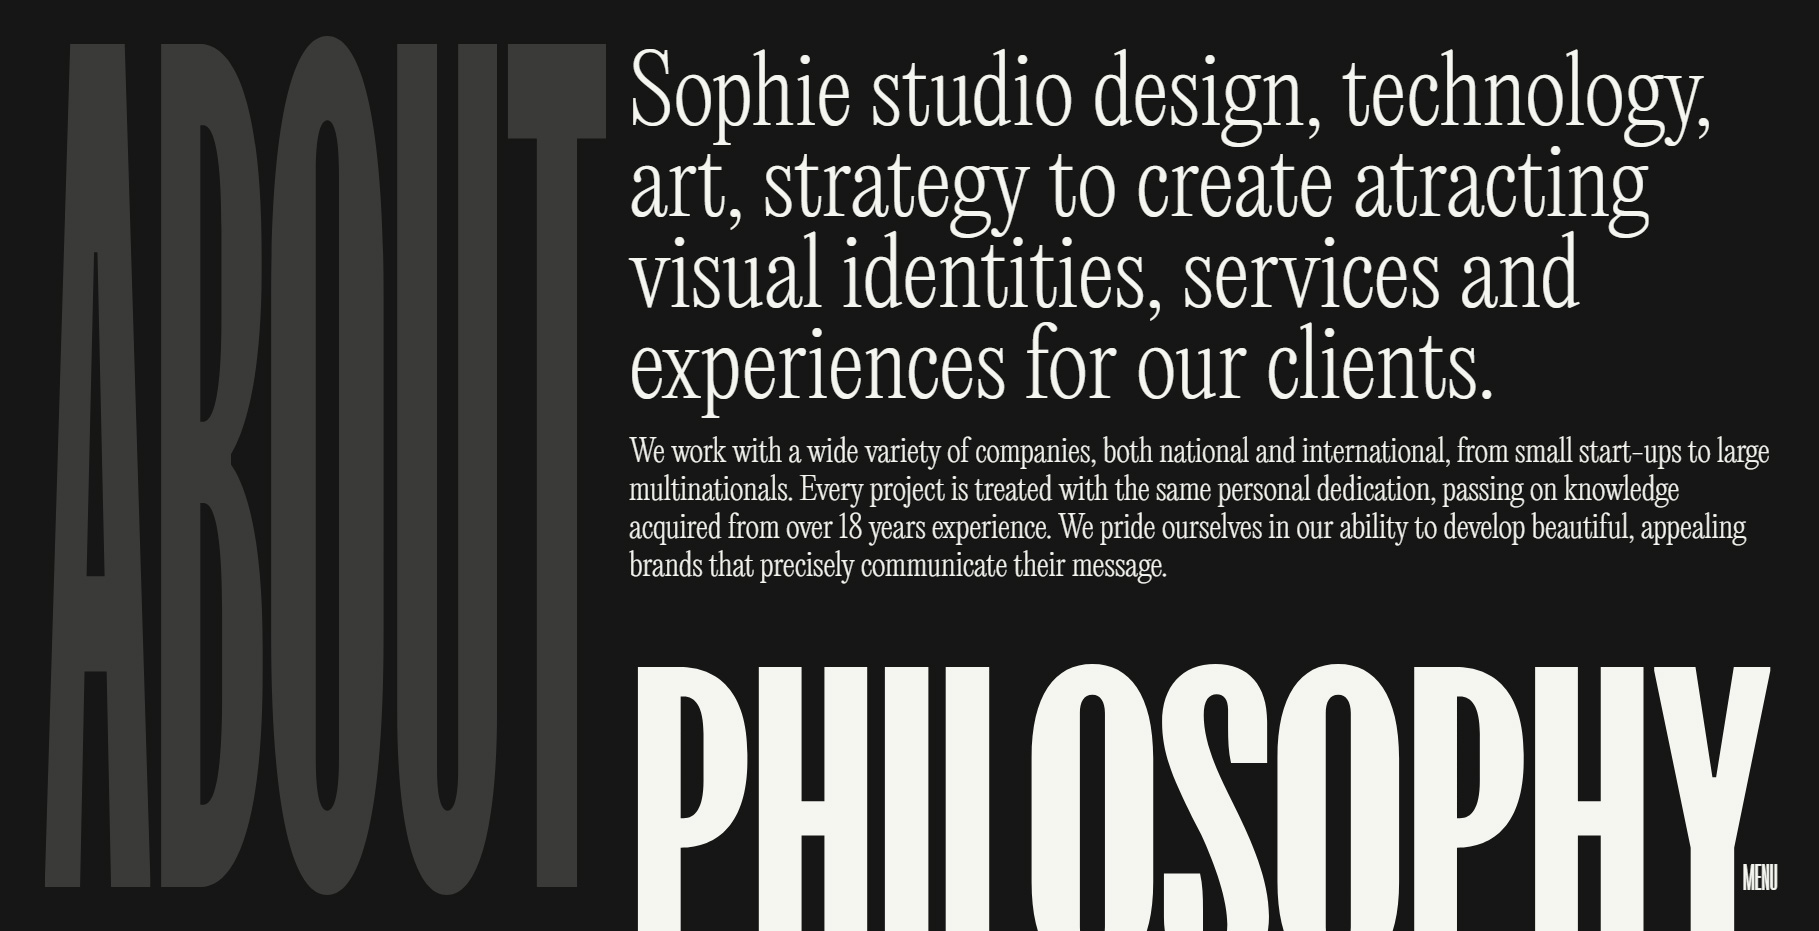 SOPHIE.STUDIO - Website of the Day